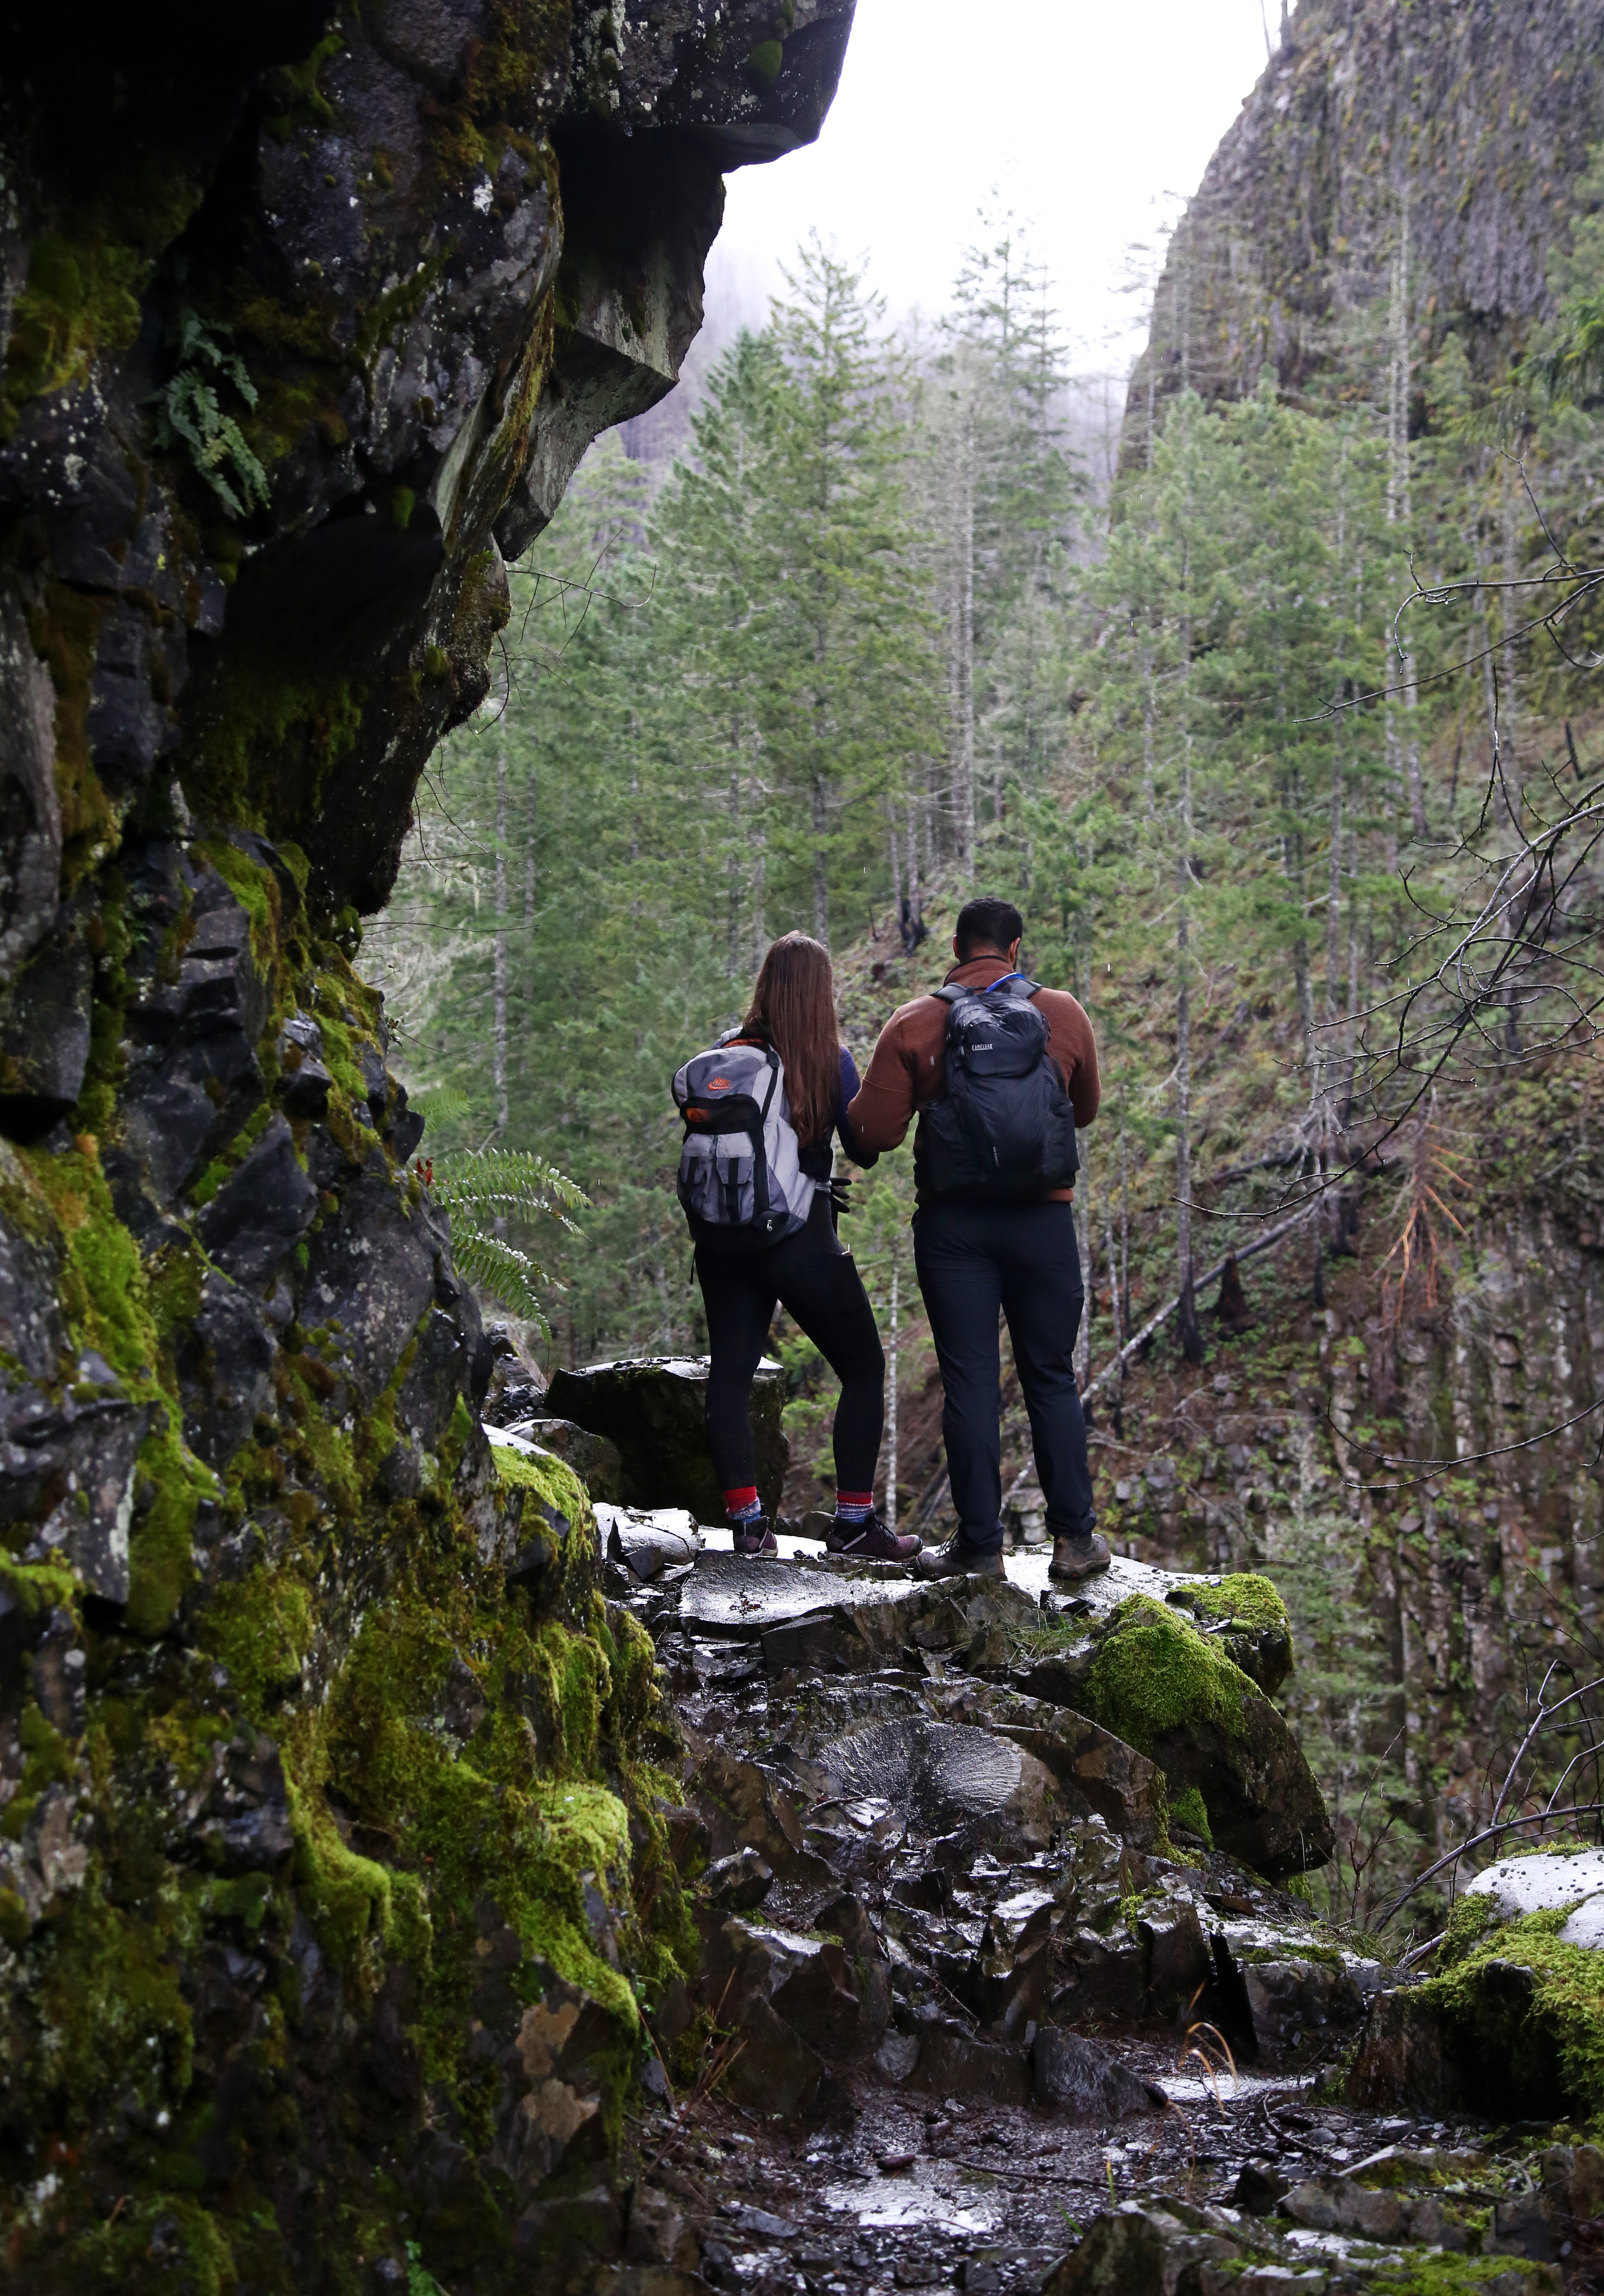 Eagle Creek Trailhead - Hiking in Portland, Oregon and Washington